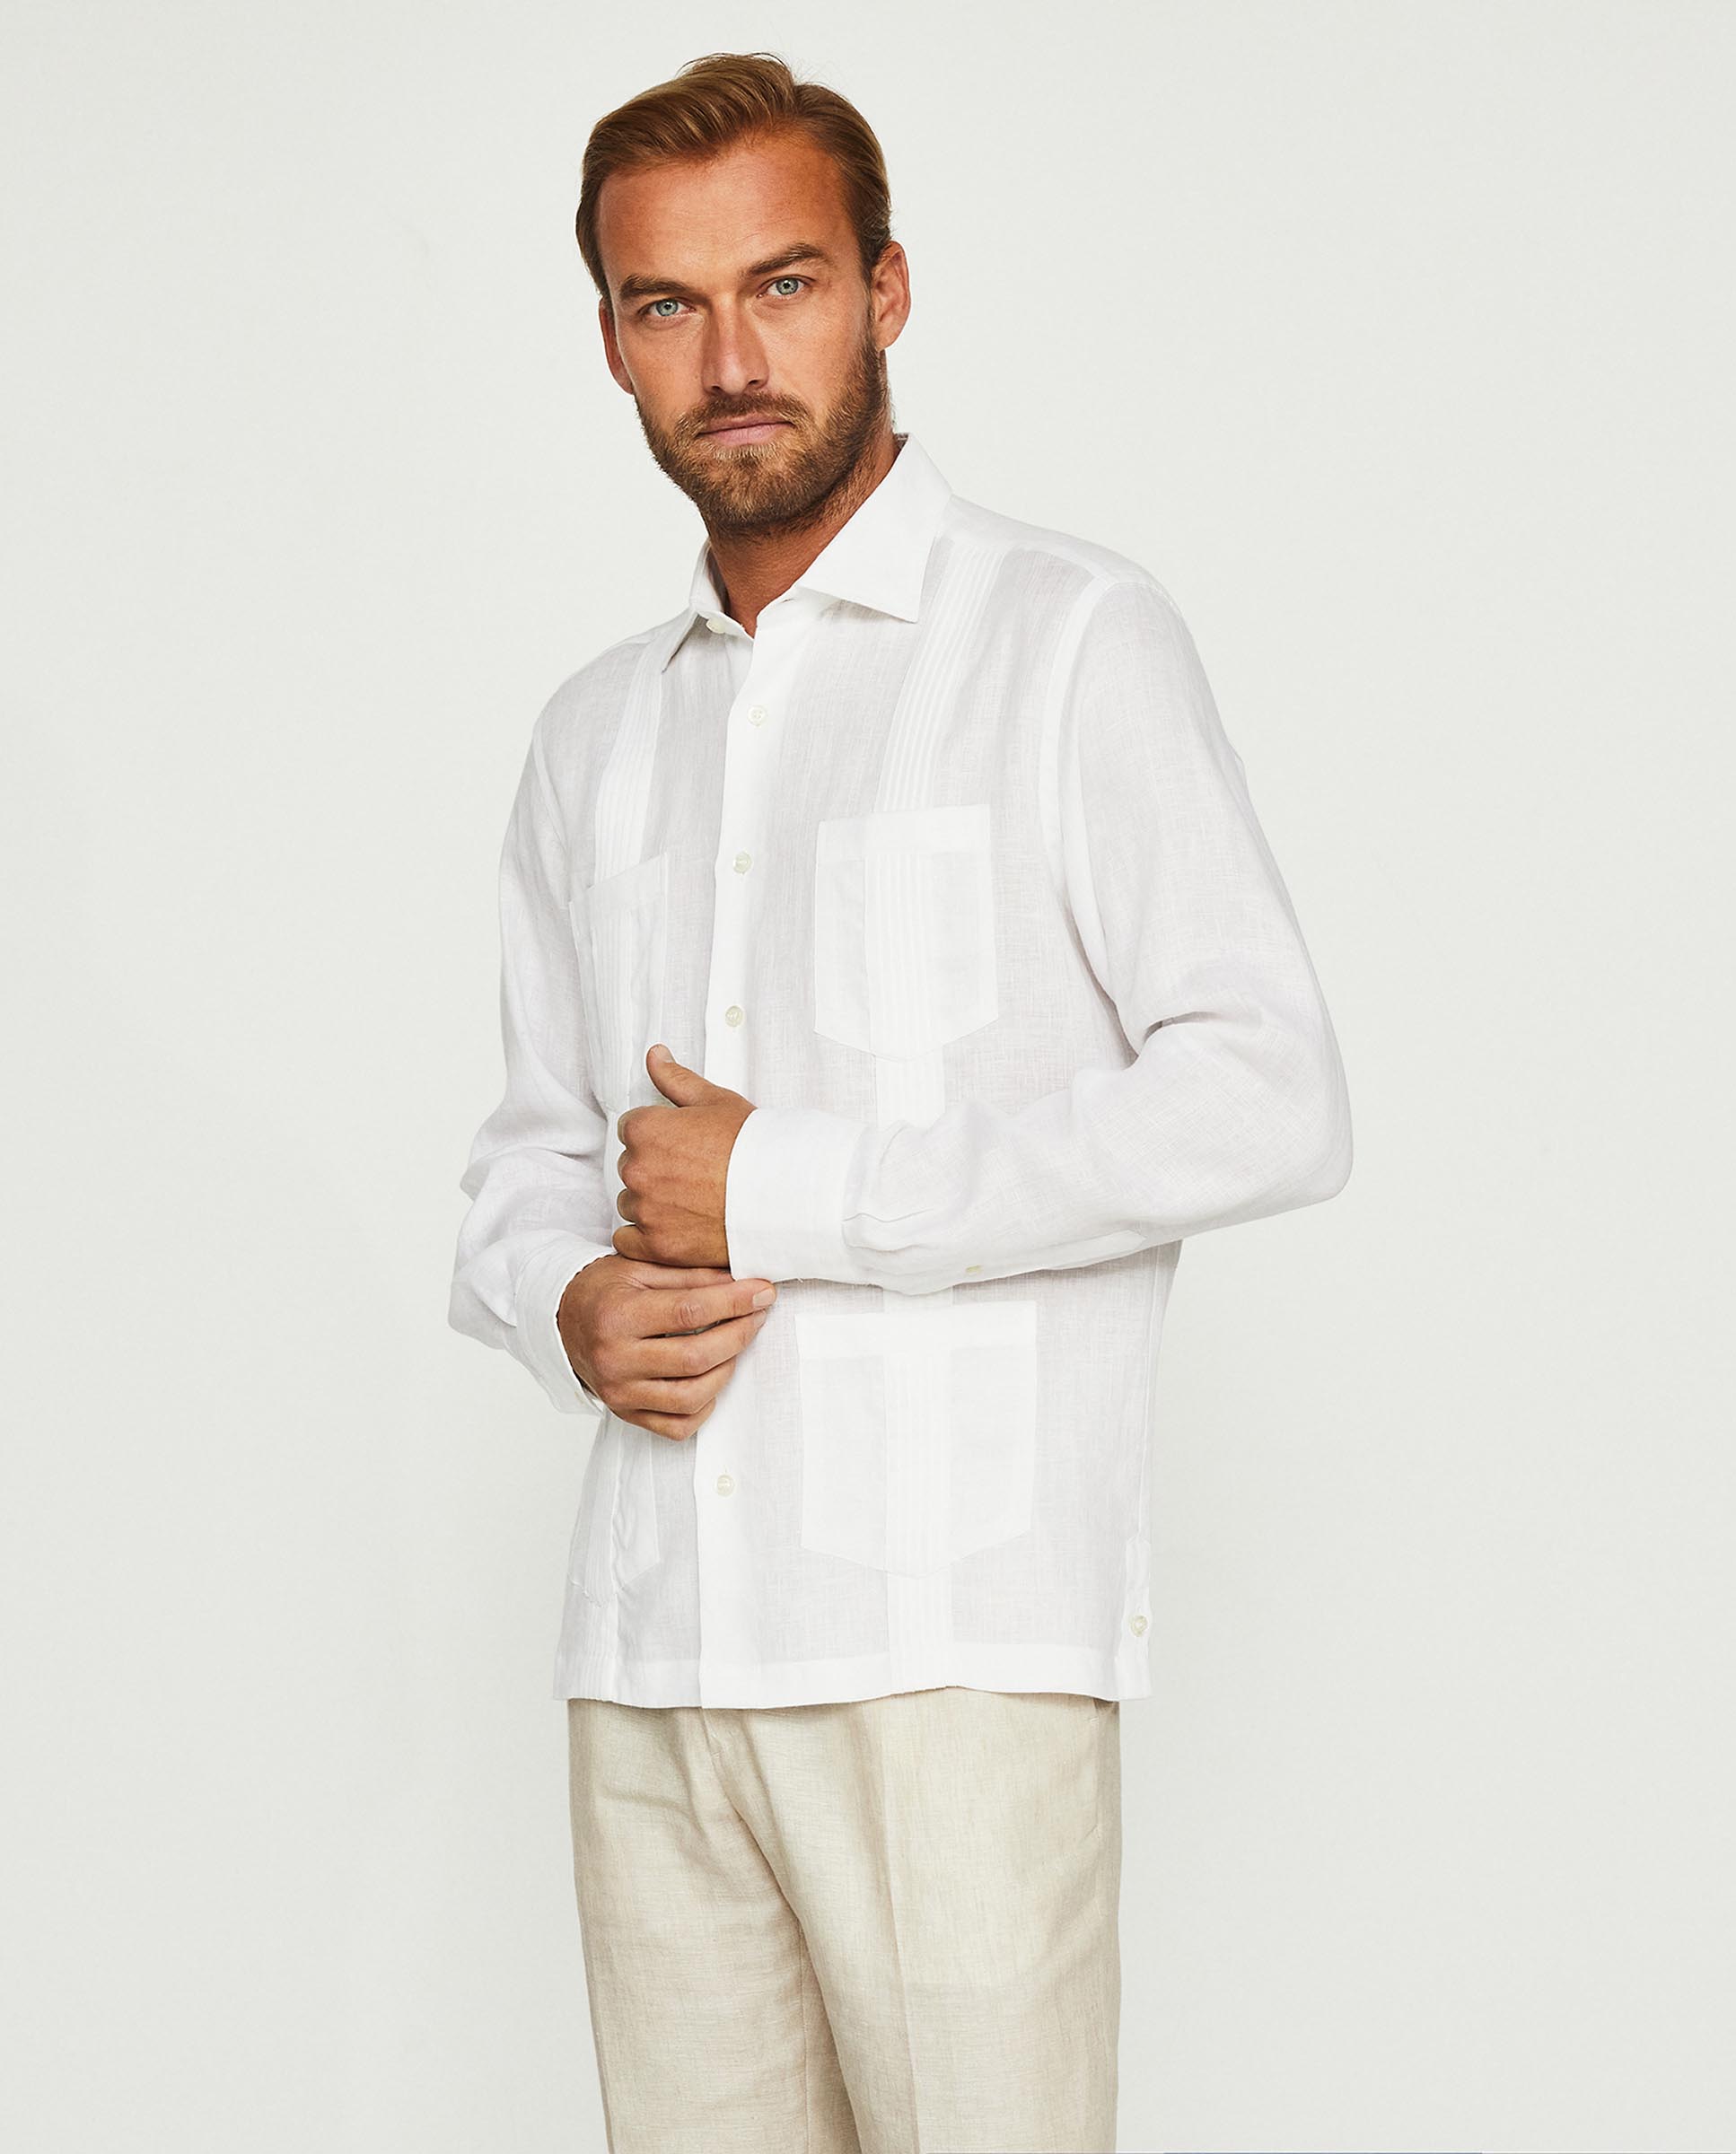 Camisa blanca manga larga - Comprar en Caetano Factory